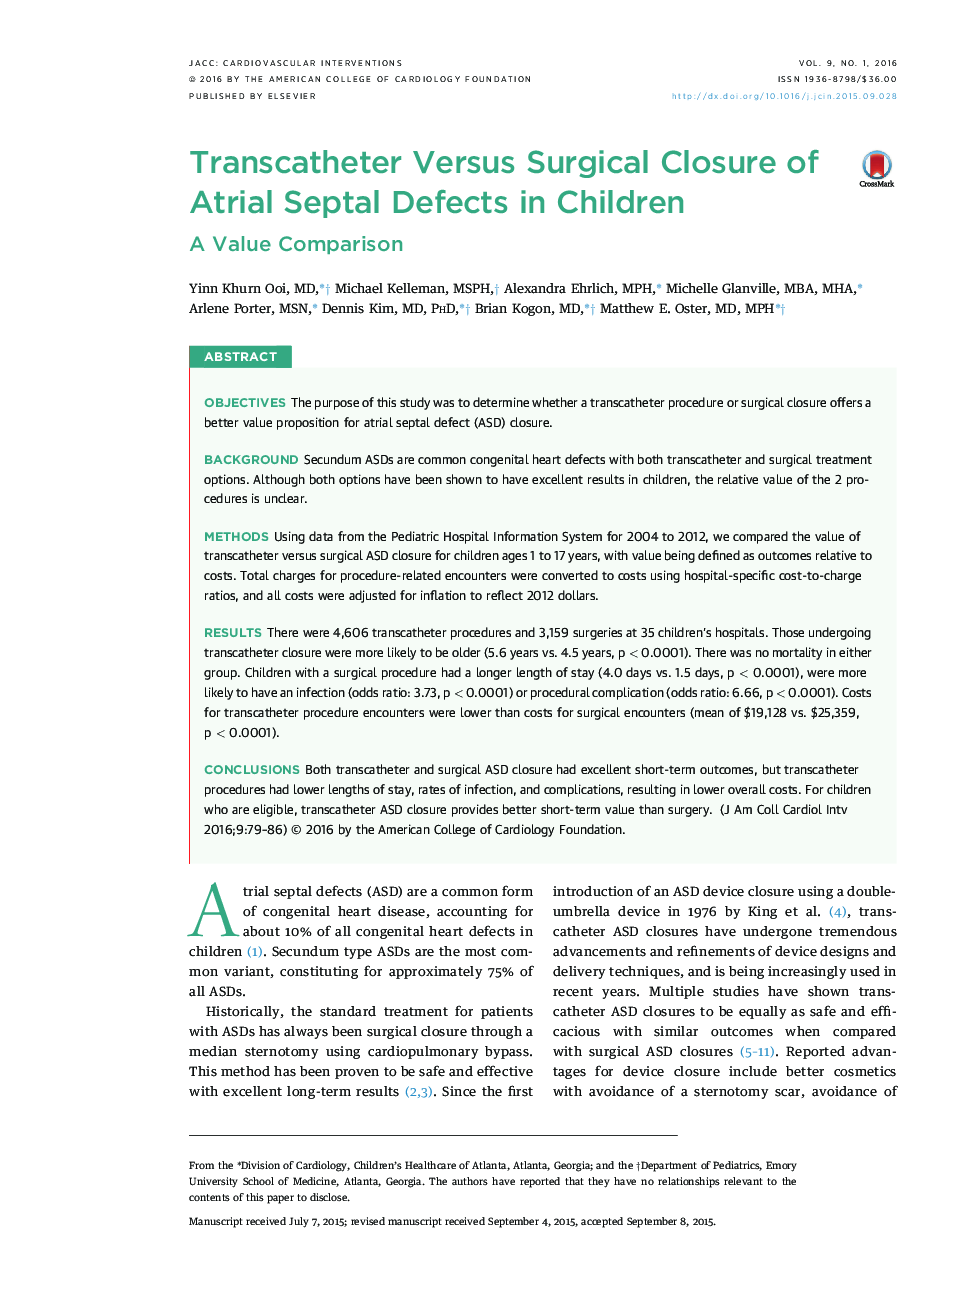 Transcatheter Versus Surgical Closure of Atrial Septal Defects in Children: A Value Comparison